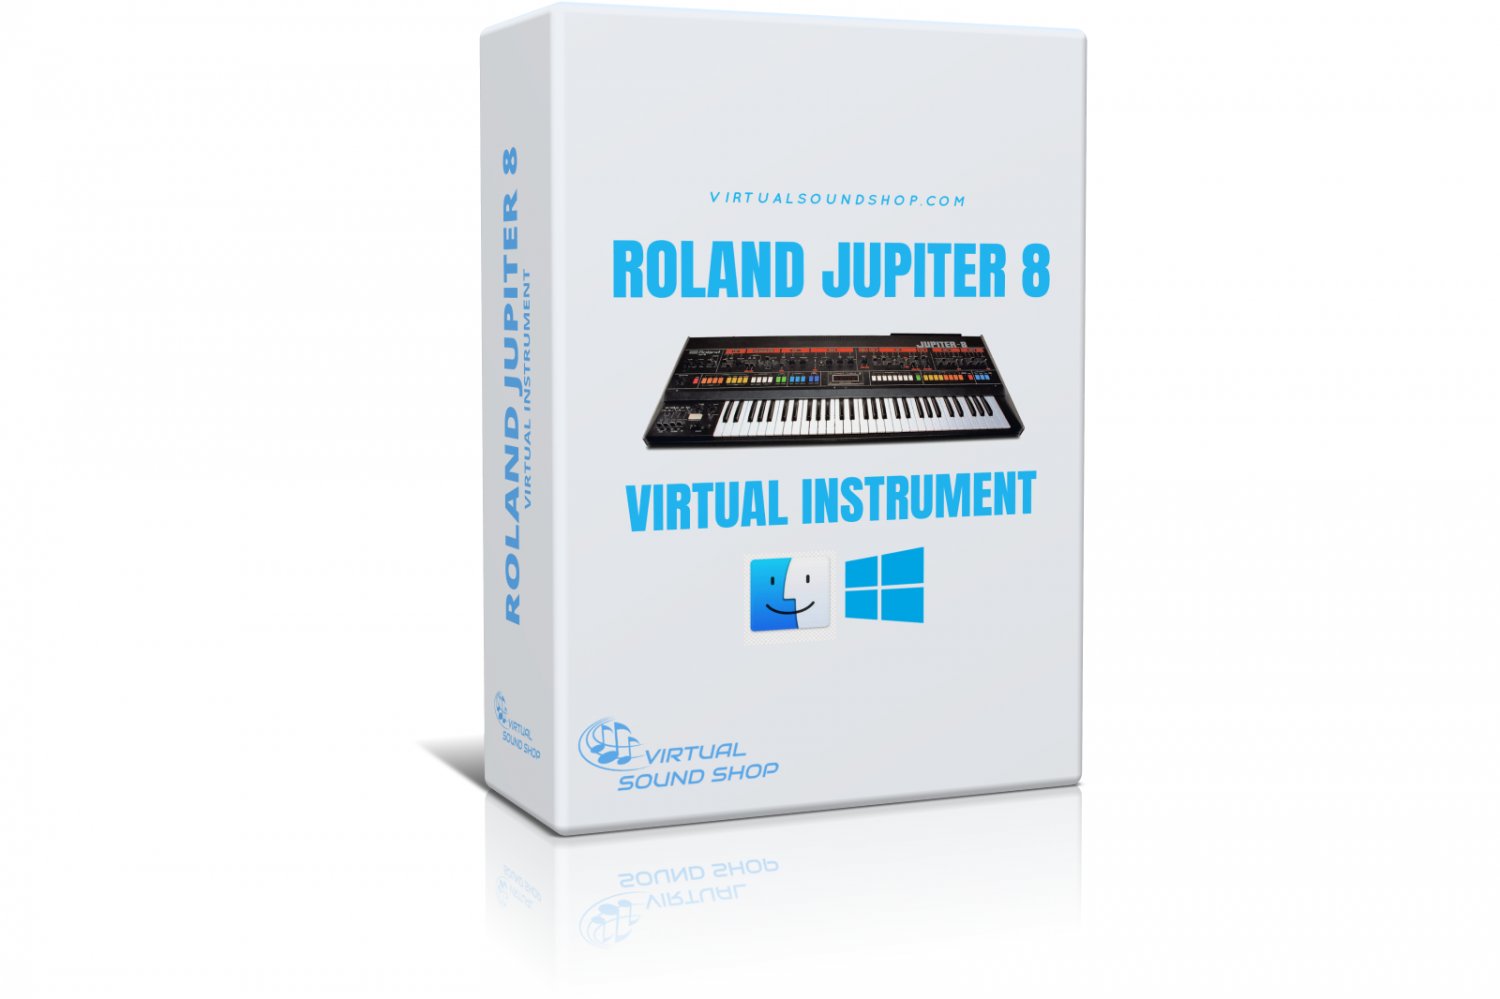 Roland Jupiter 8 VST Virtual Instrument Software | Windows PC, Mac OSX